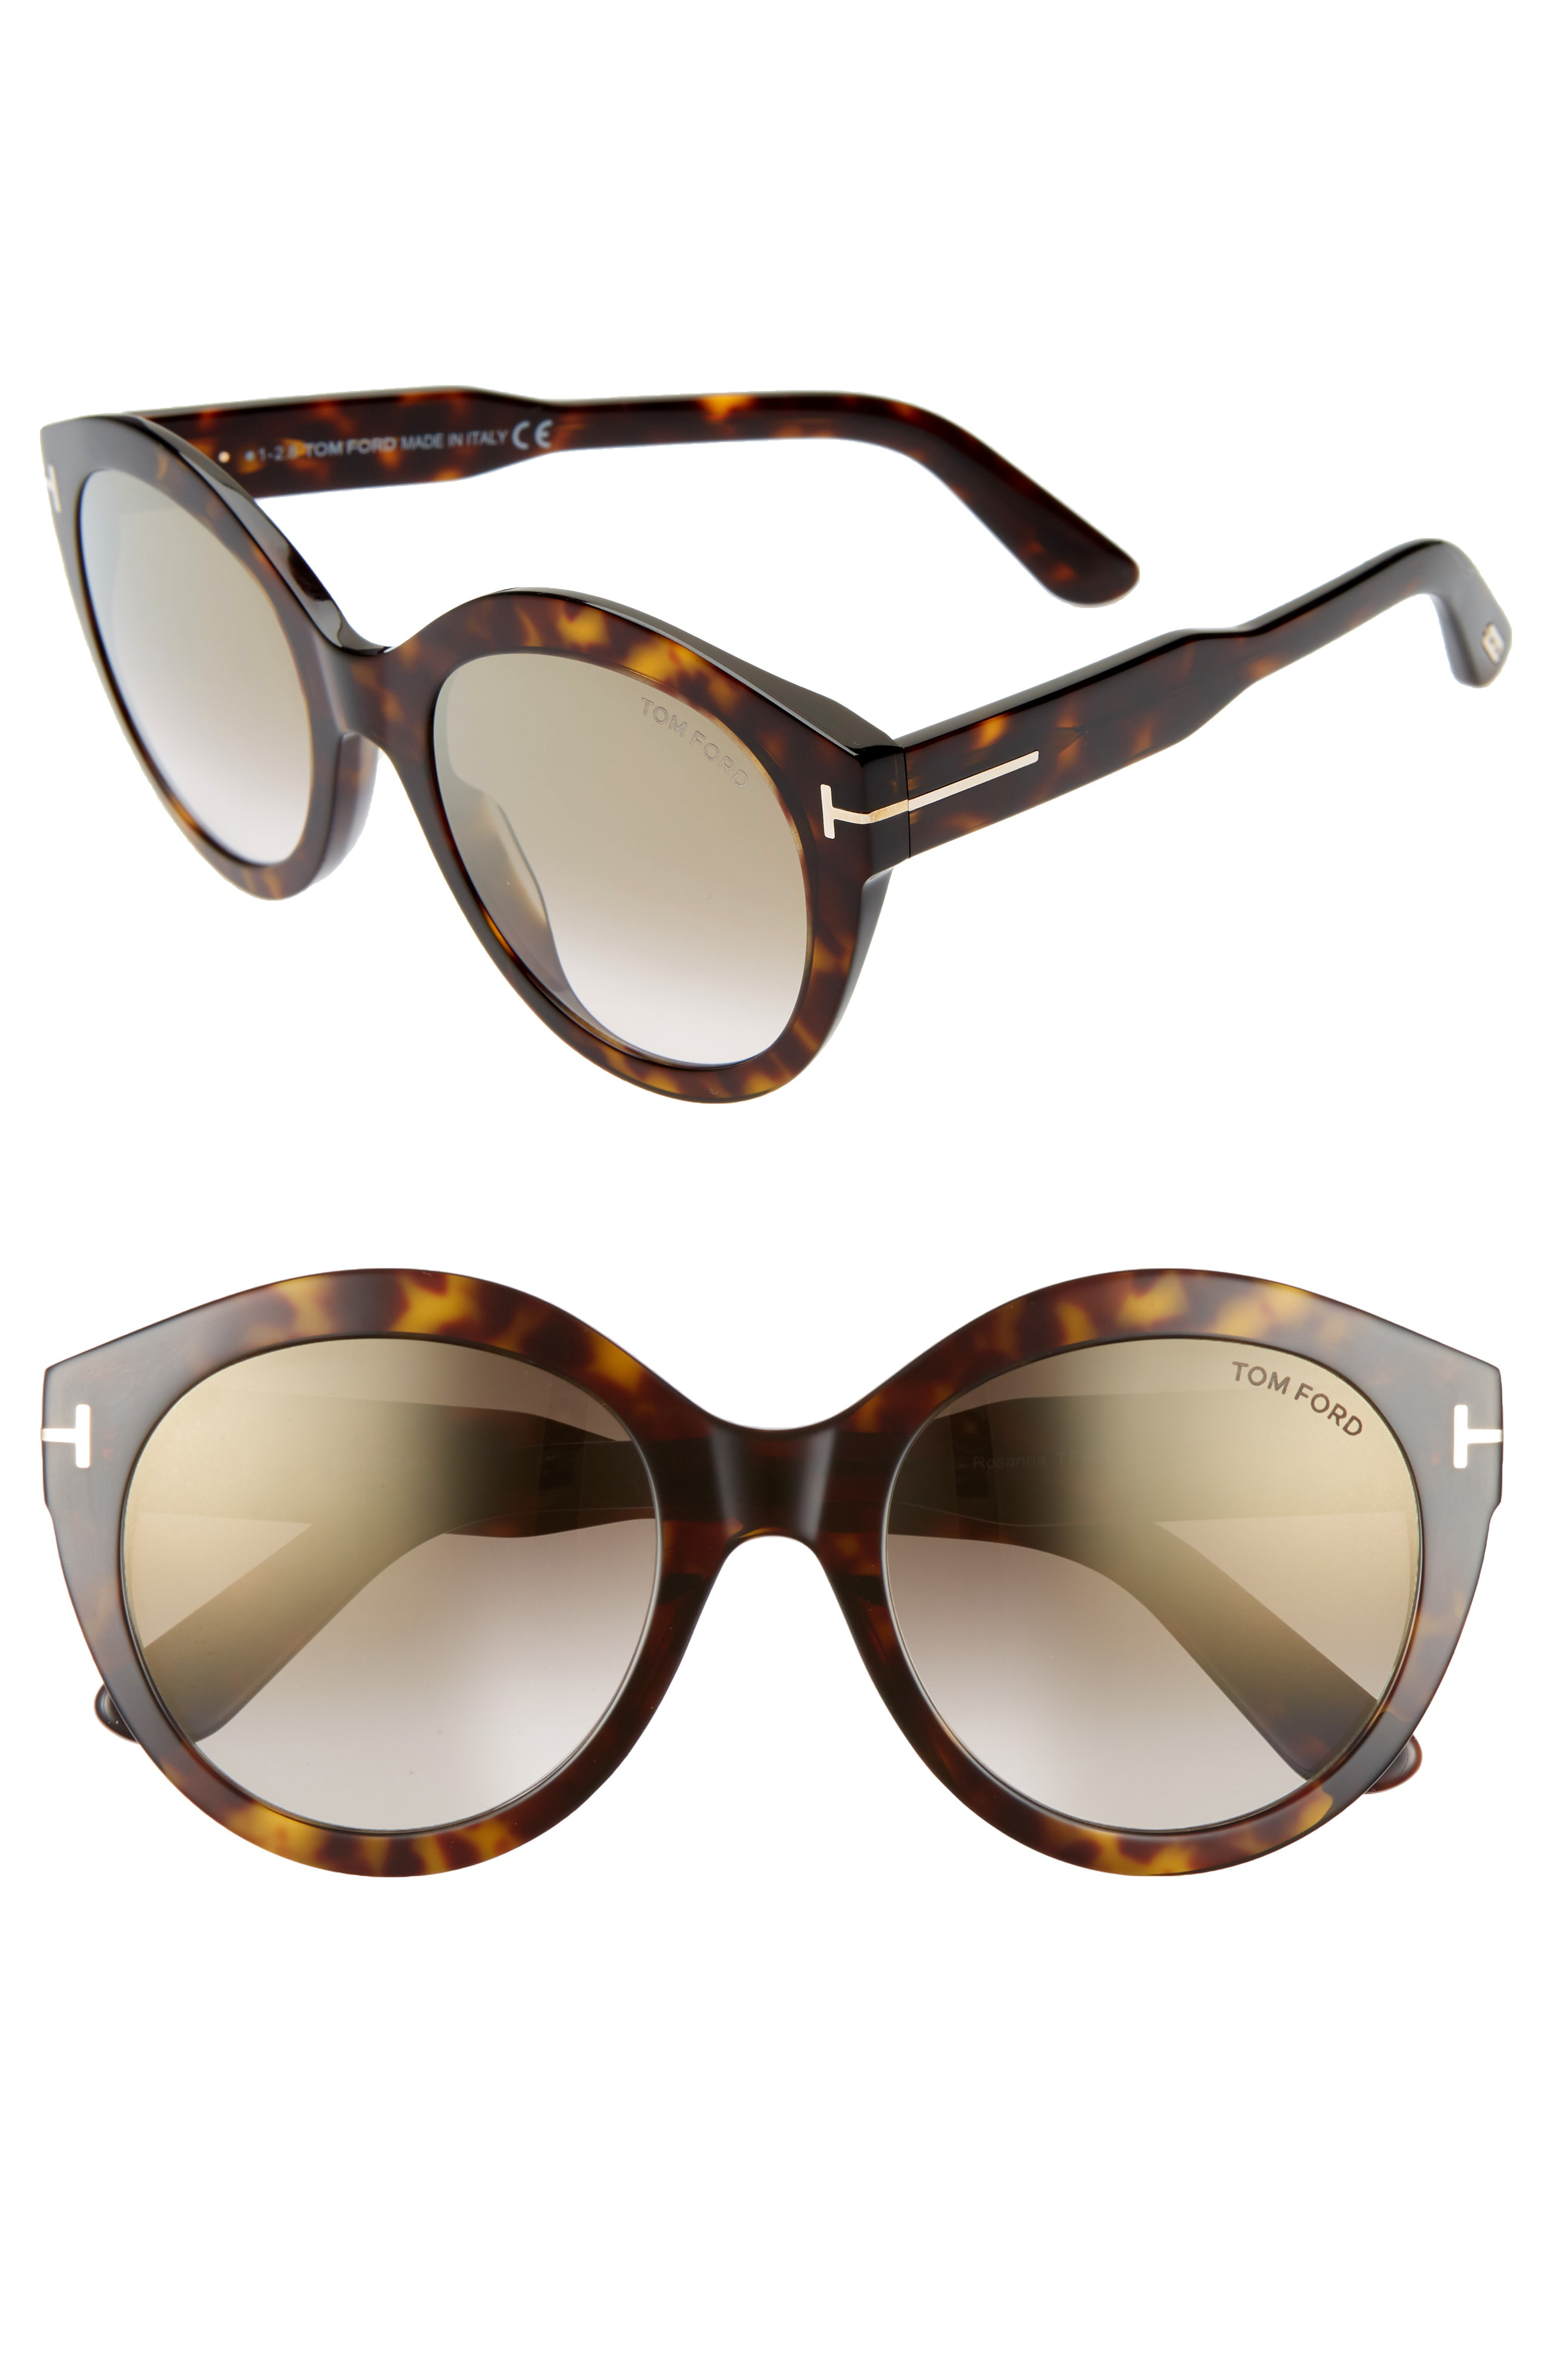 Tom Ford Rosanna 54Mm Round Cat Eye Sunglasses - Shiny Classic Dark Havana | ModeSens